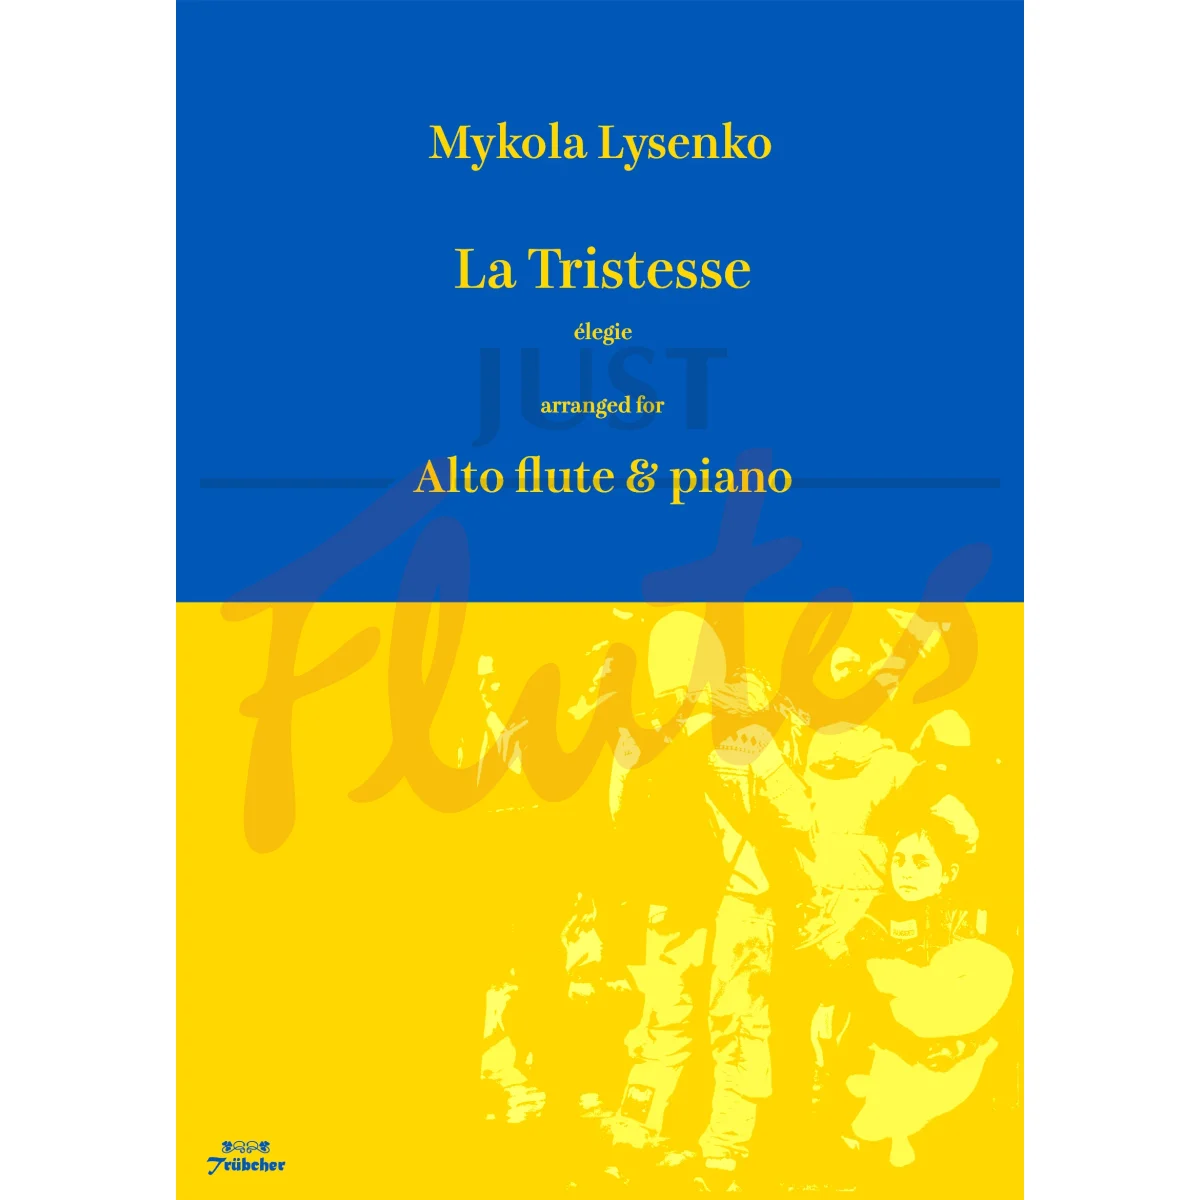 La Tristesse: Élegie for Alto Flute and Piano